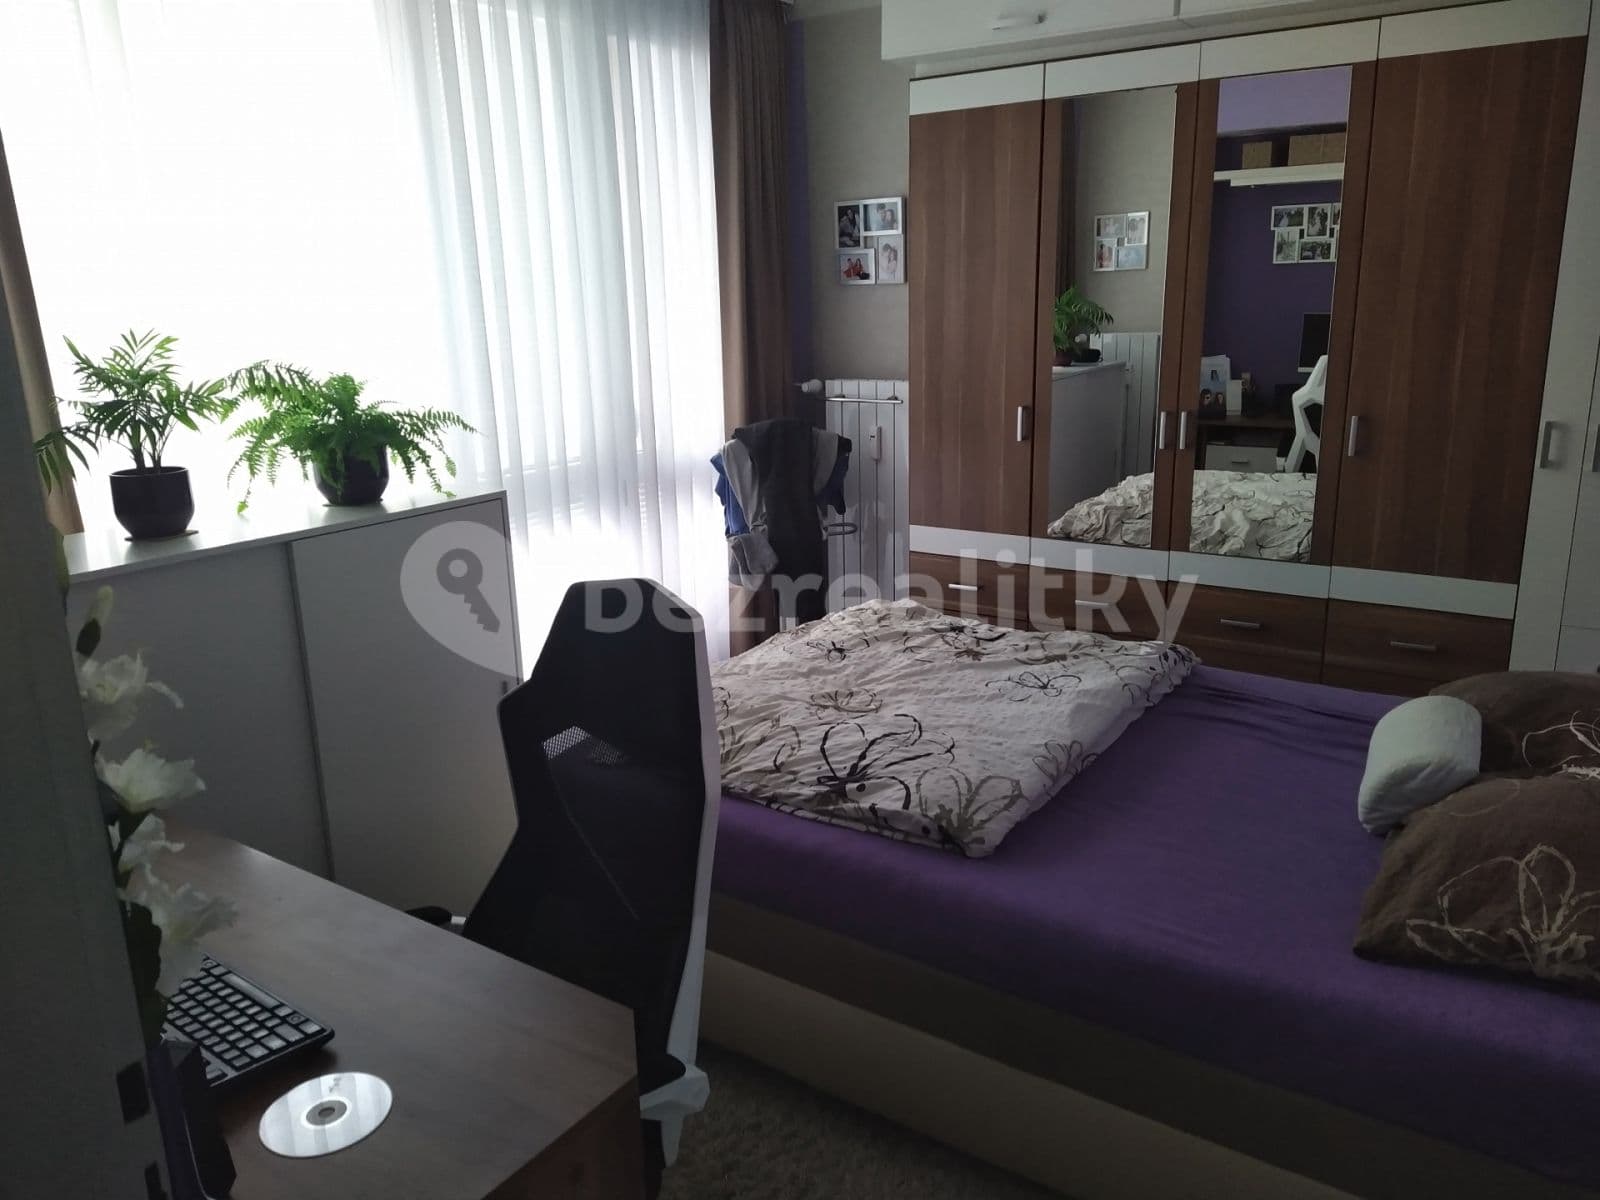 Predaj bytu 3-izbový 64 m², Jičínská, Mladá Boleslav, Středočeský kraj